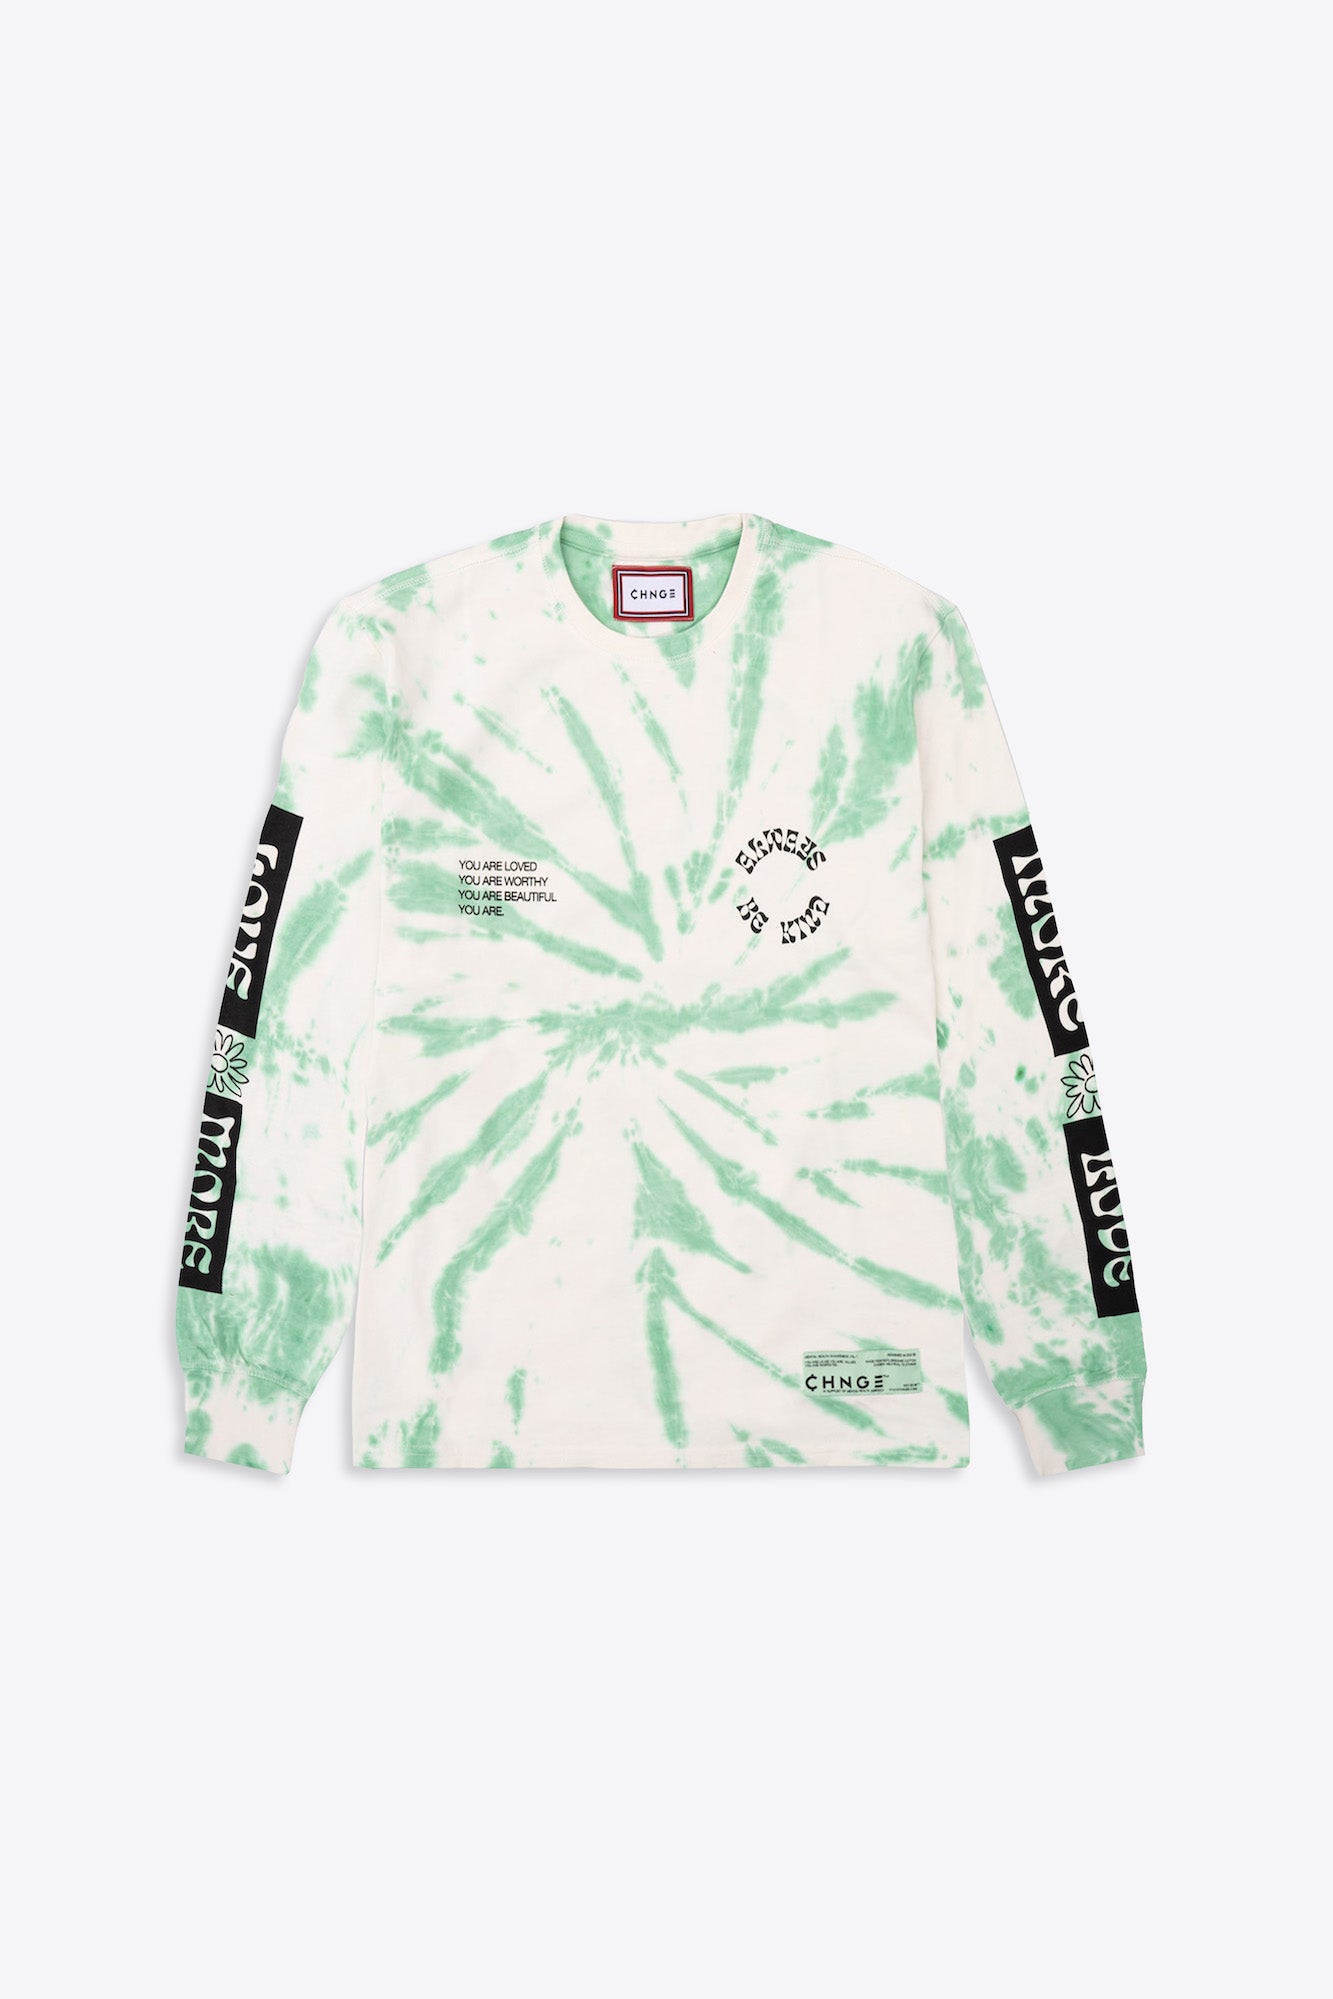 T-Shirt Love Cuffed $47 (Green L/S More Spiral TD)